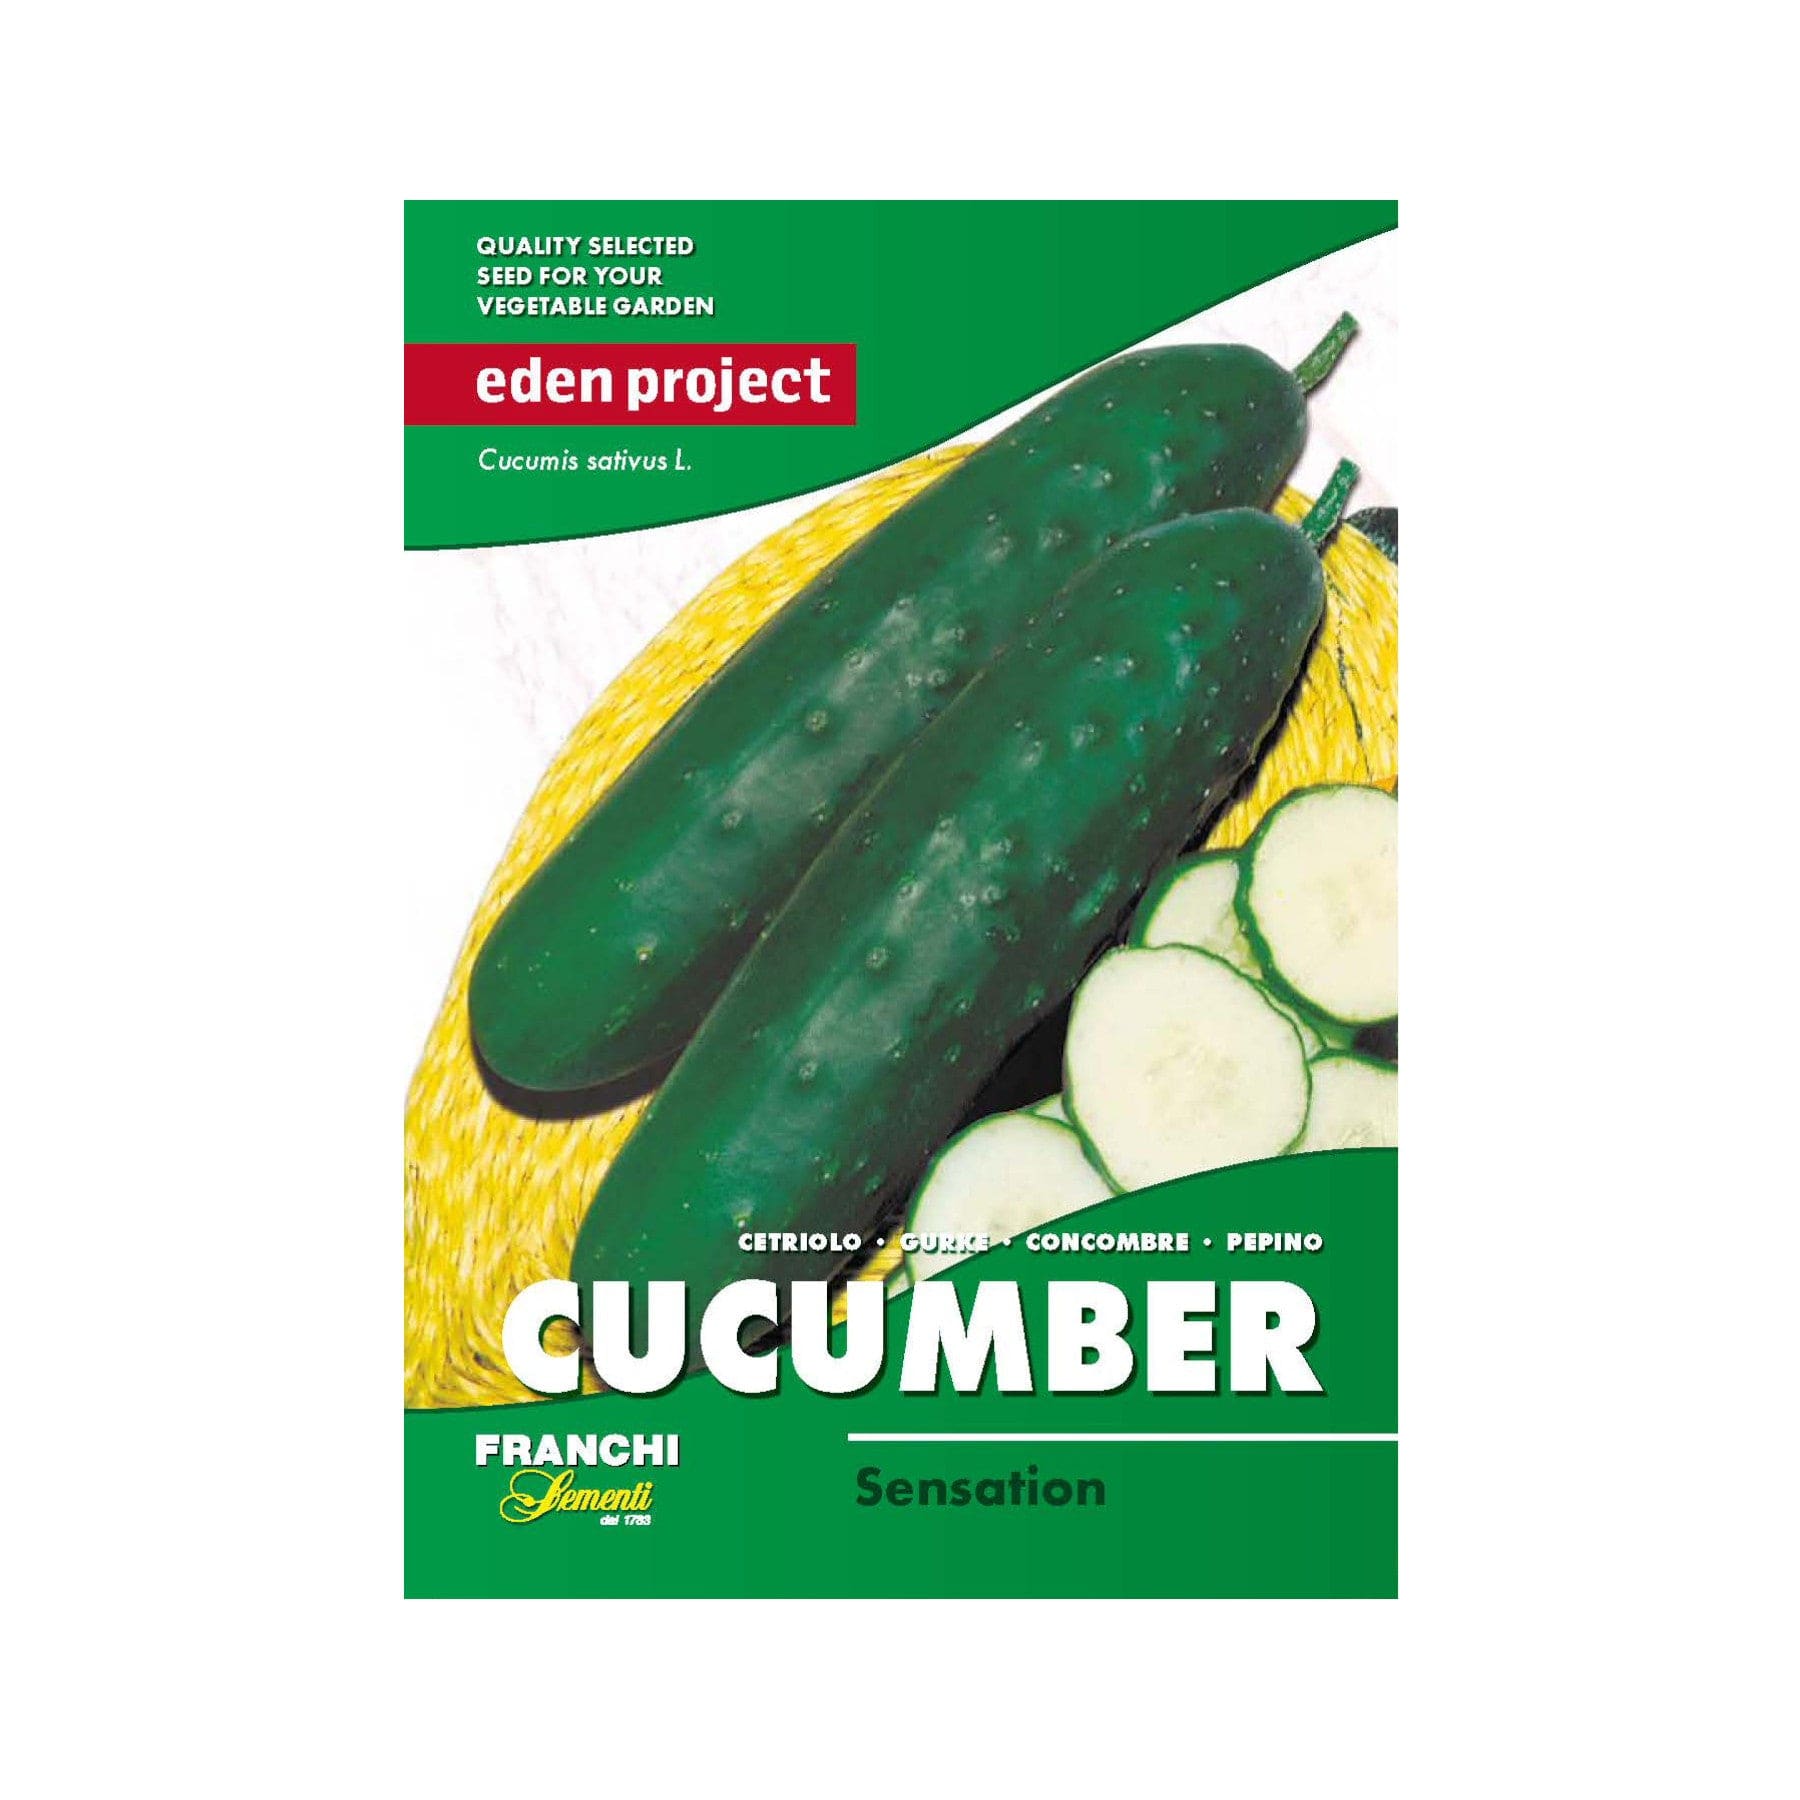 Cucumber sensation seeds